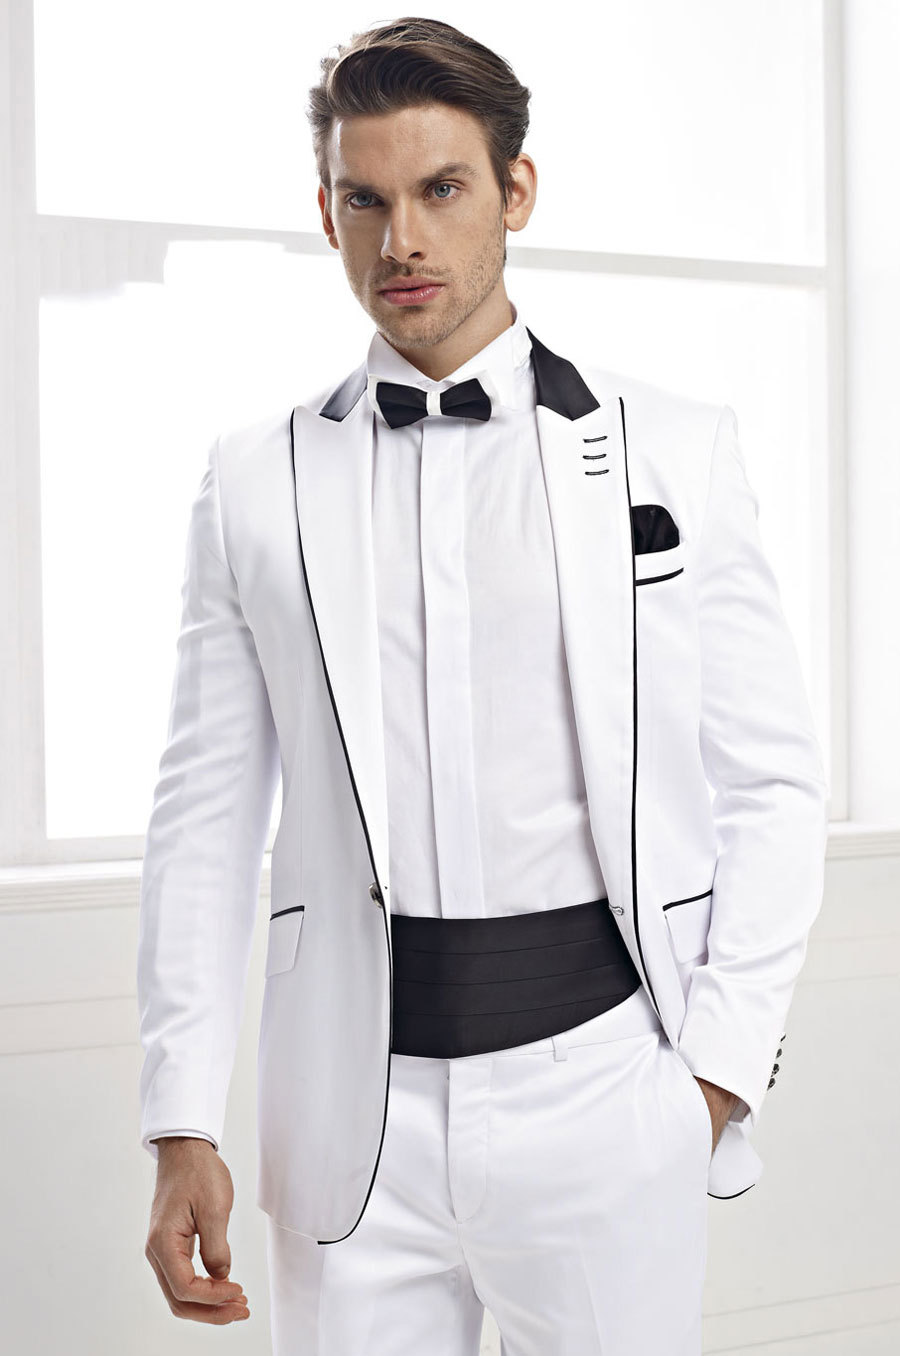 Make-Custom-Fashion-2015-White-Design-Cheap-Tuxedos-Man-Suit-Slim-Fit-Groomsman-Bridegroom-Suits-Jacket.jpg